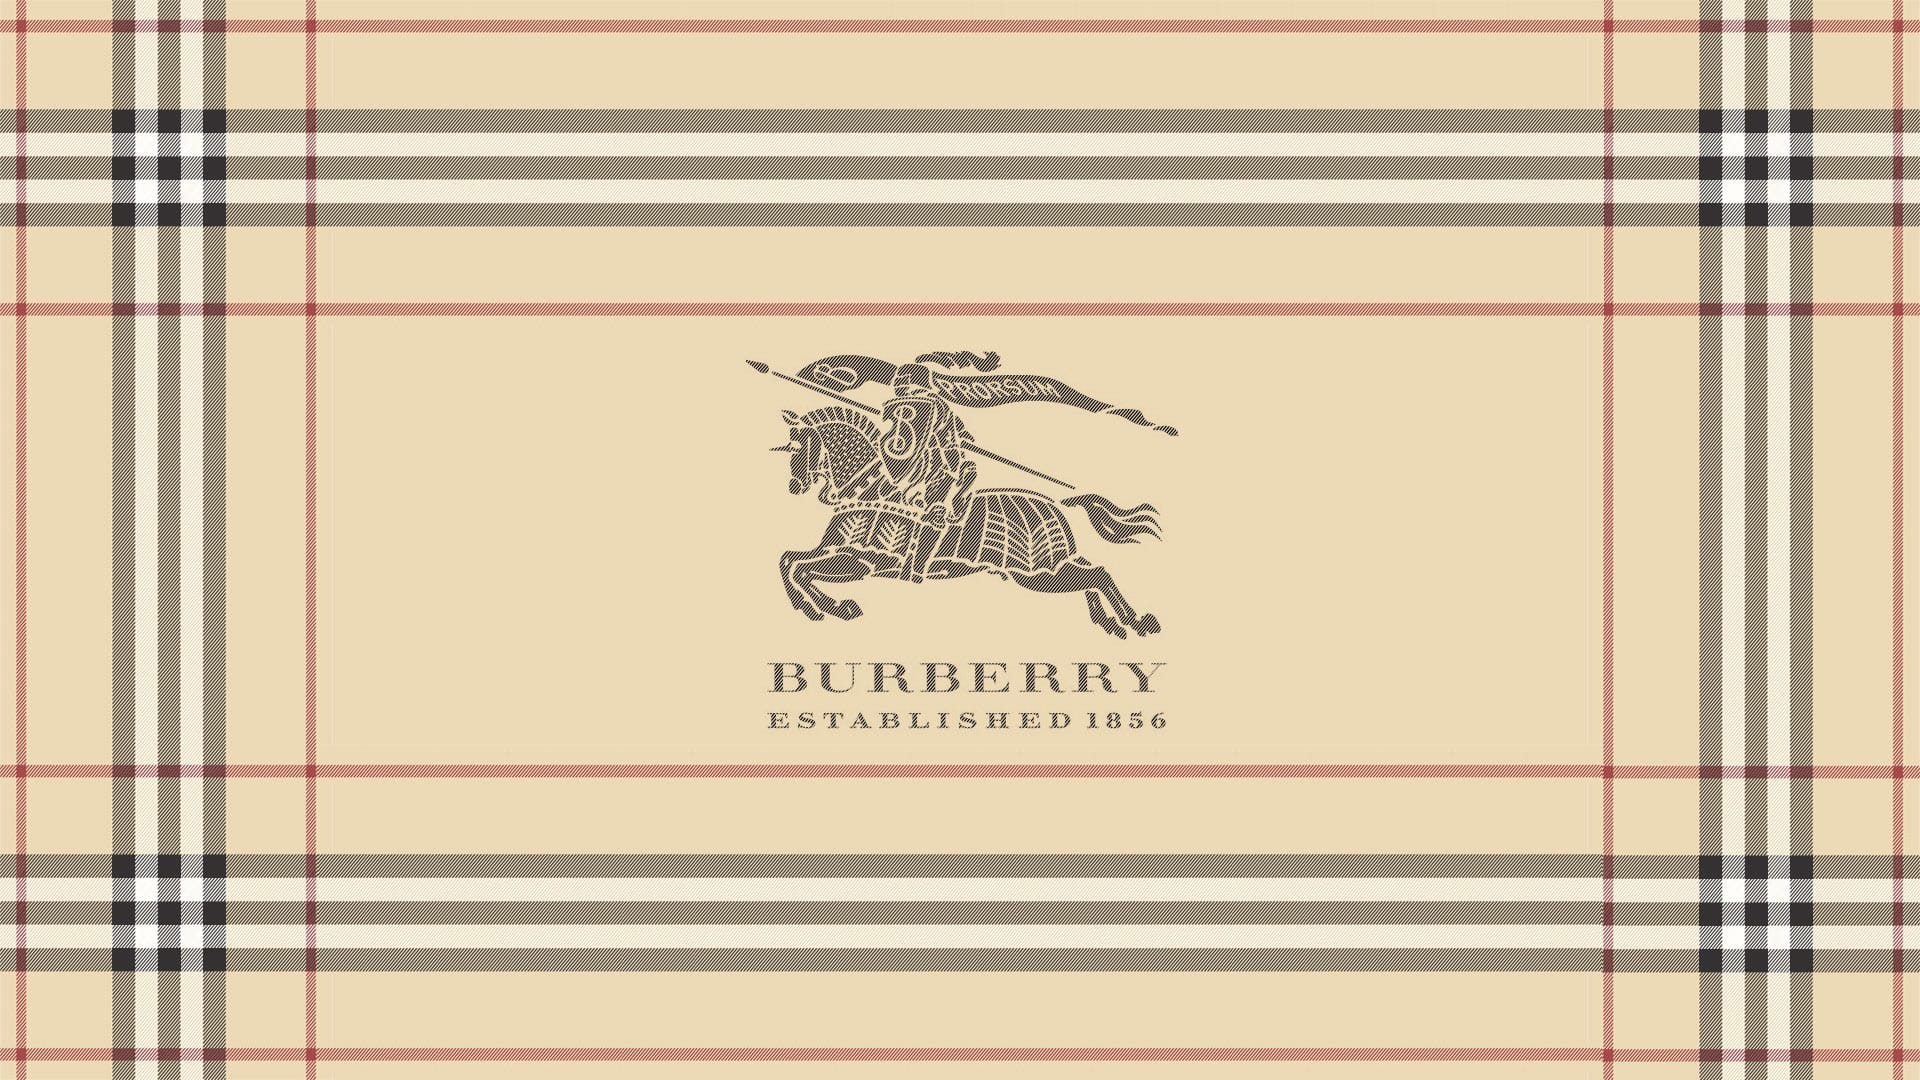 Shine on Burberry